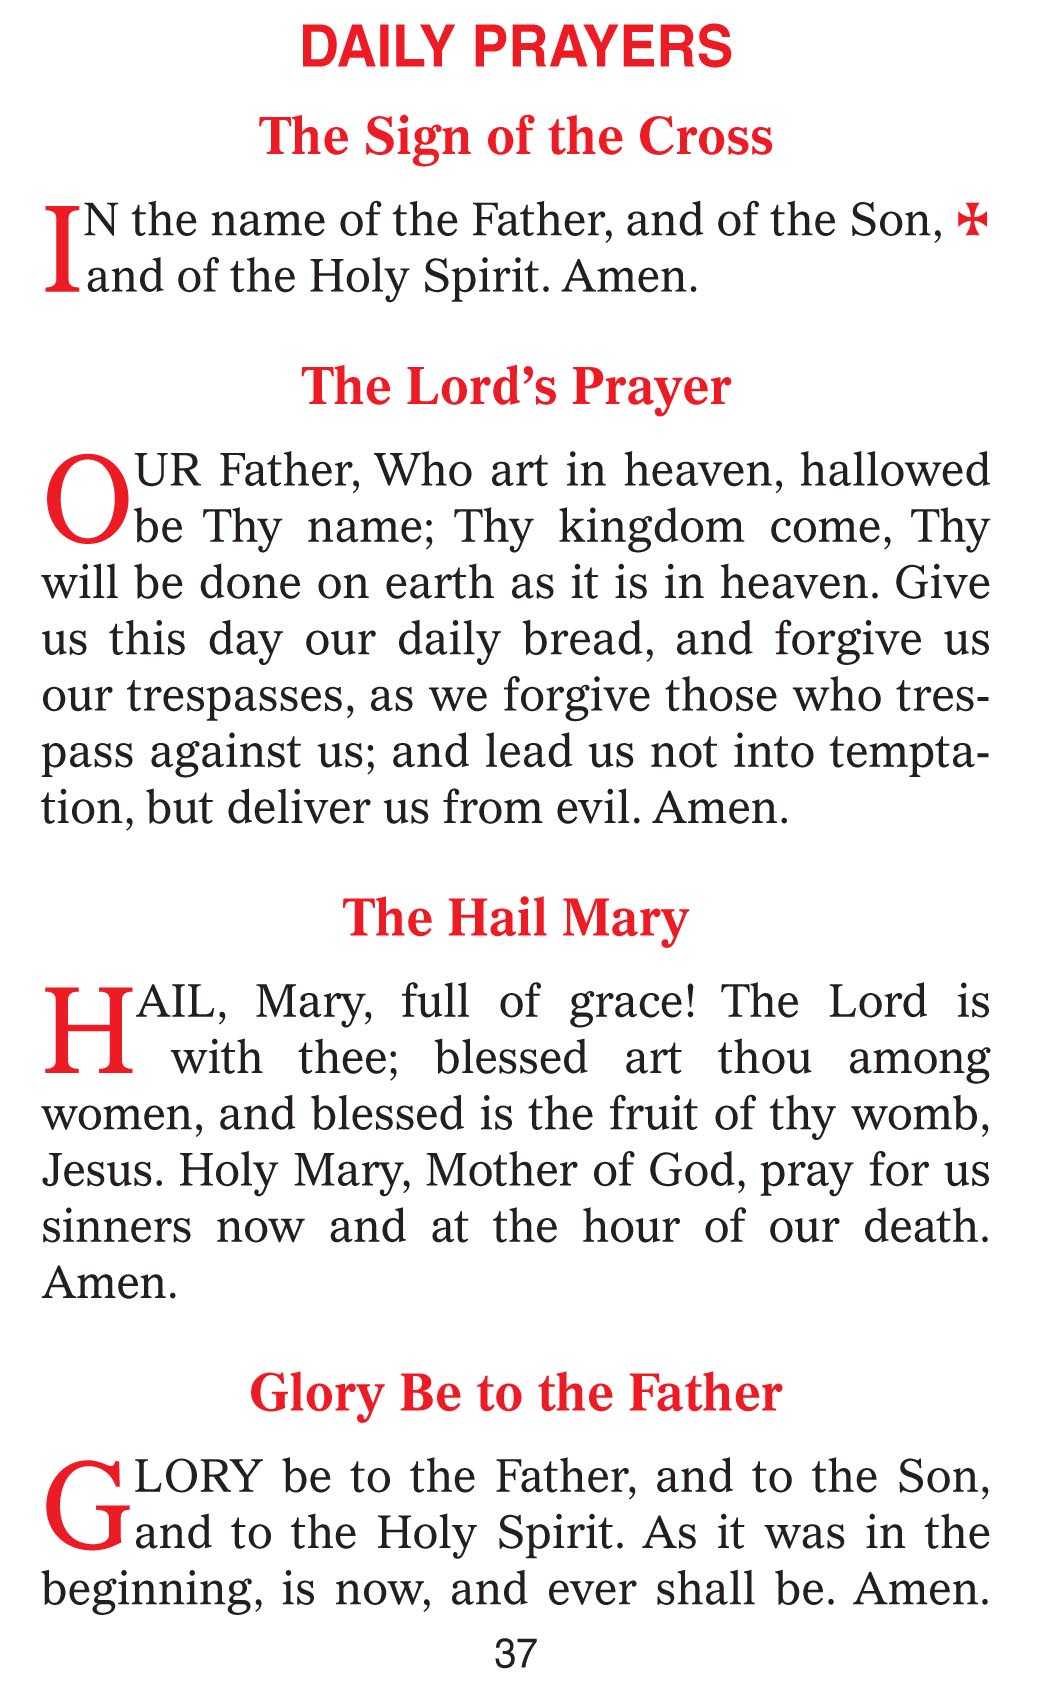 pocket-book-of-catholic-prayers-32-04-mckay-church-goods